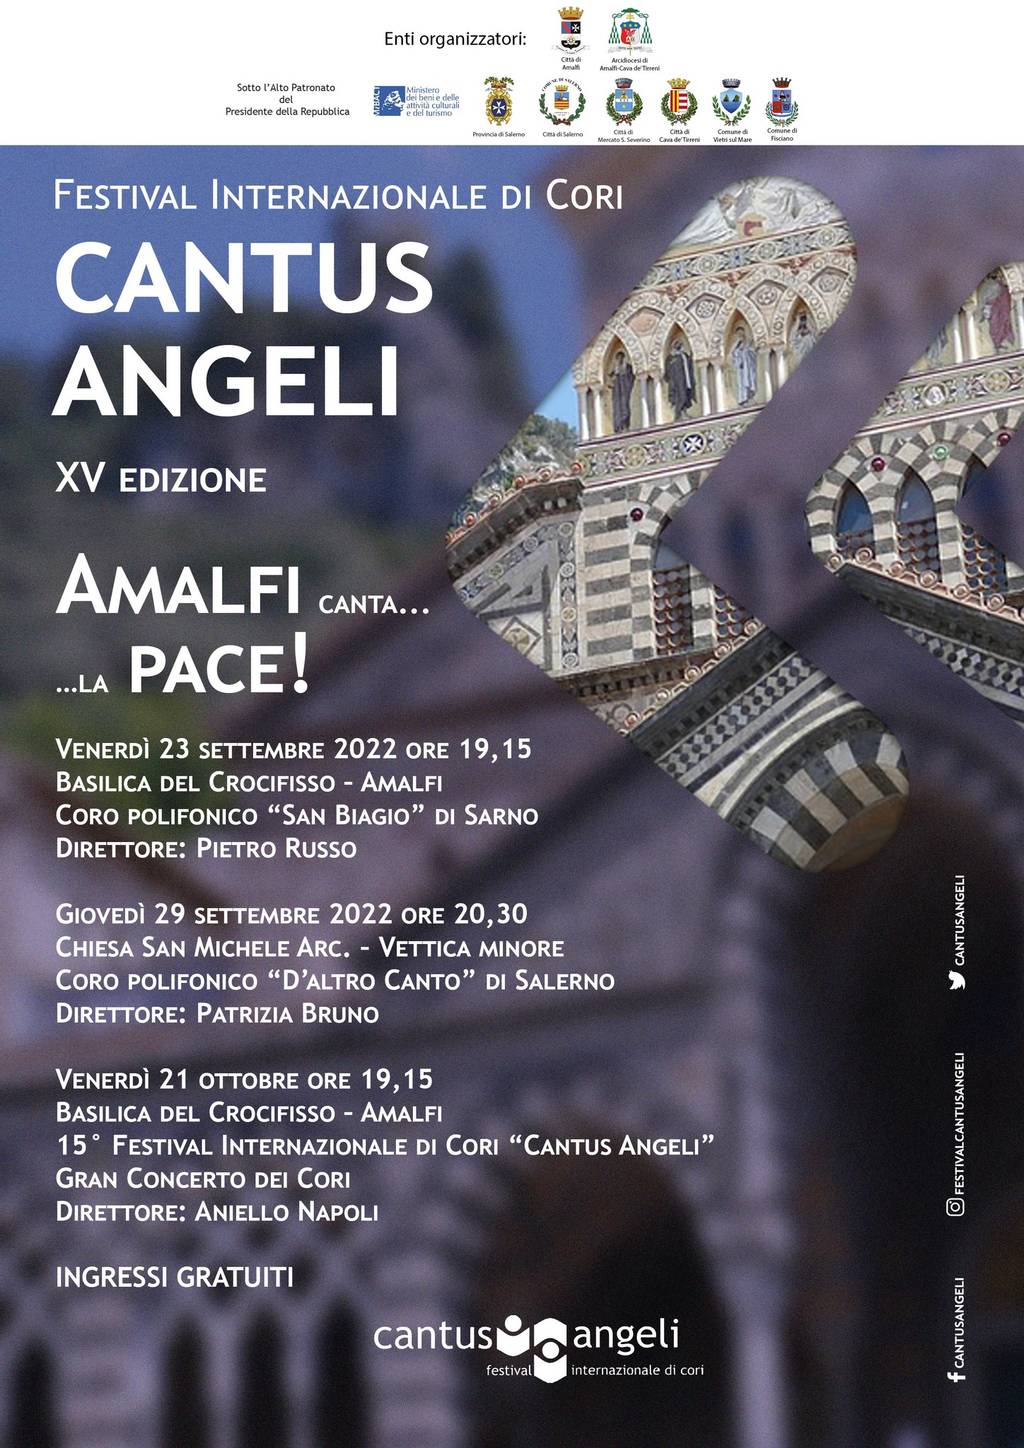 Cantus Angeli XV Edition